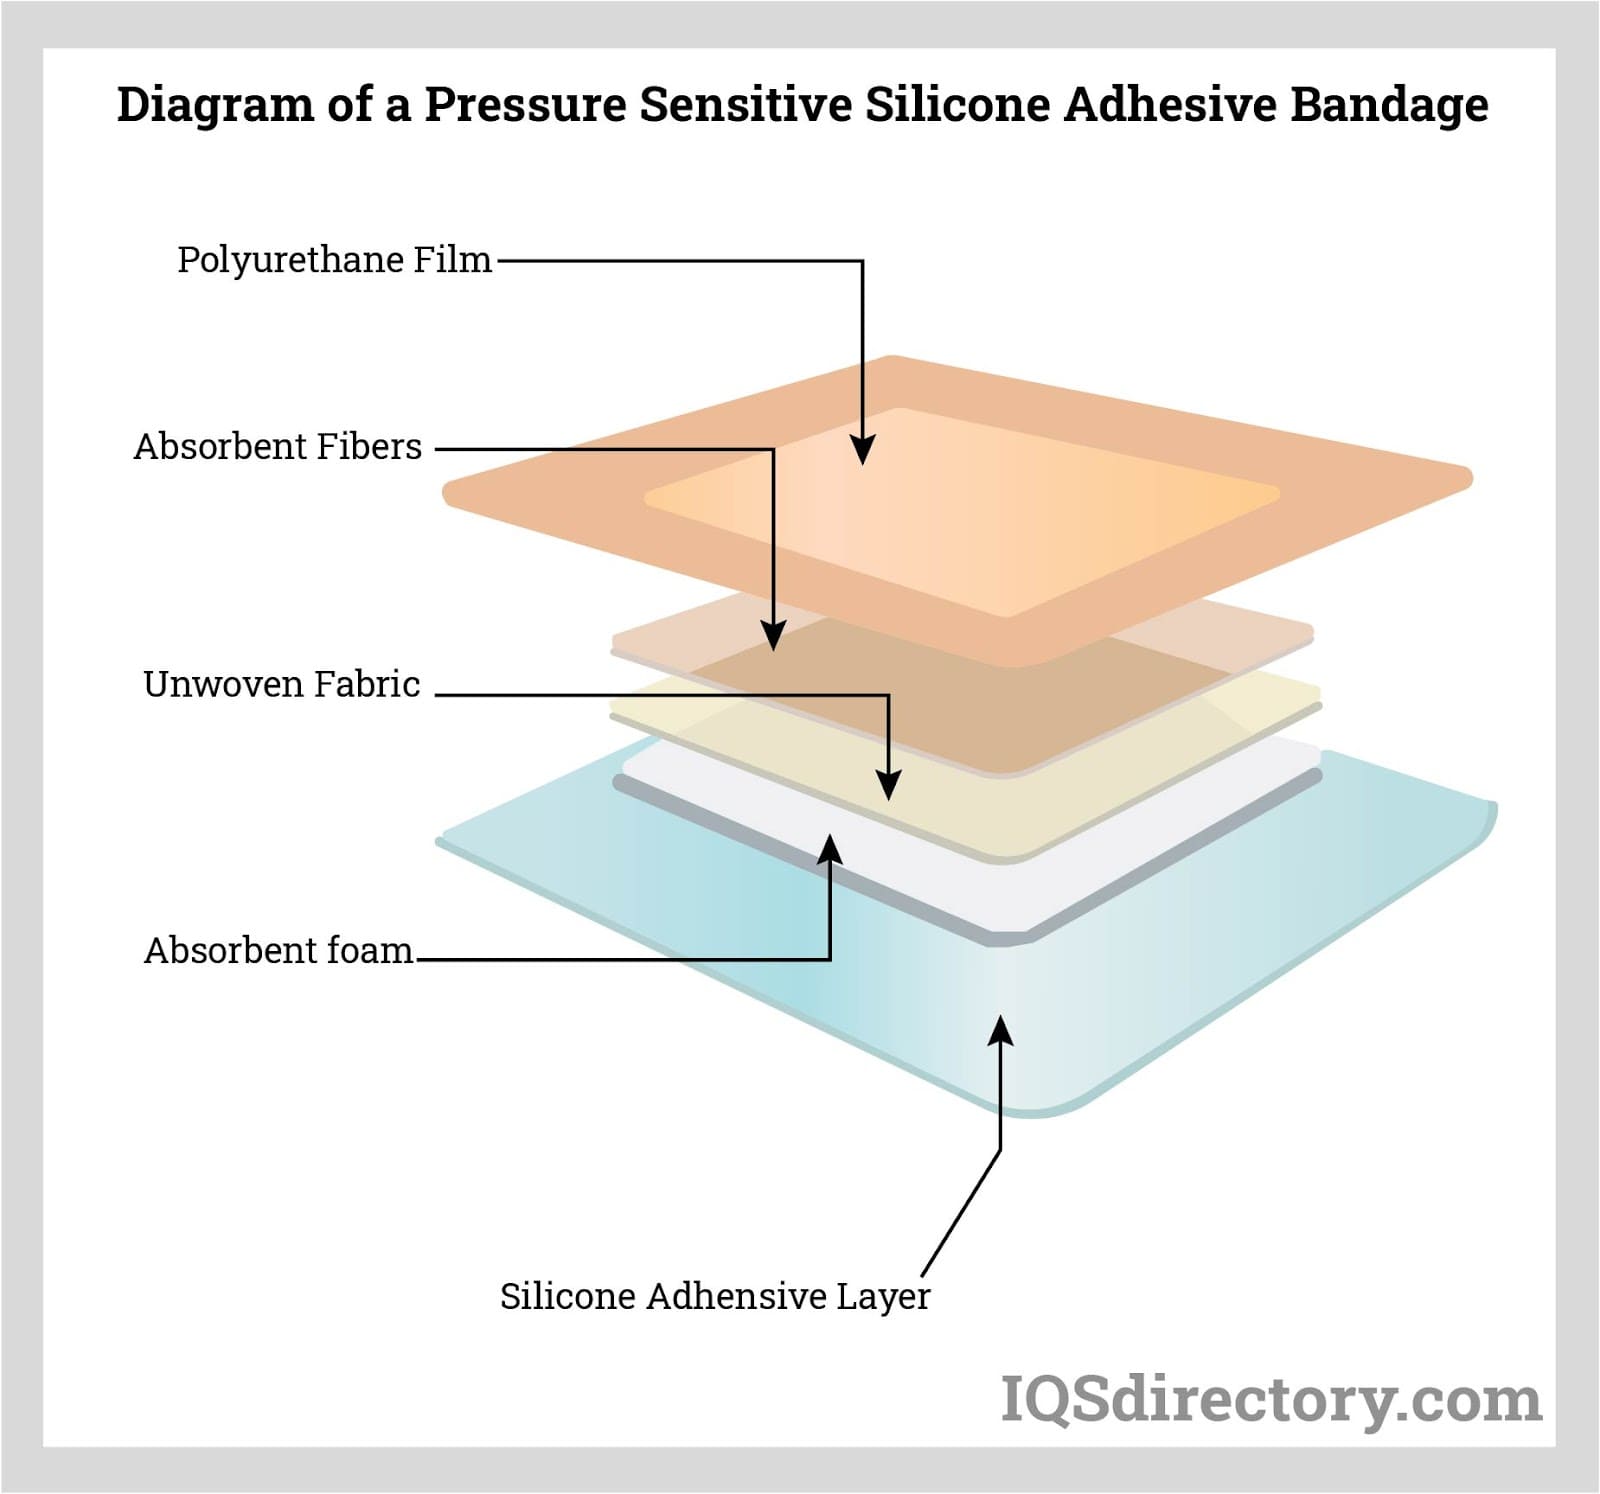 Diagram of a Pressure Sensitive Silicone Adhesive Bandage